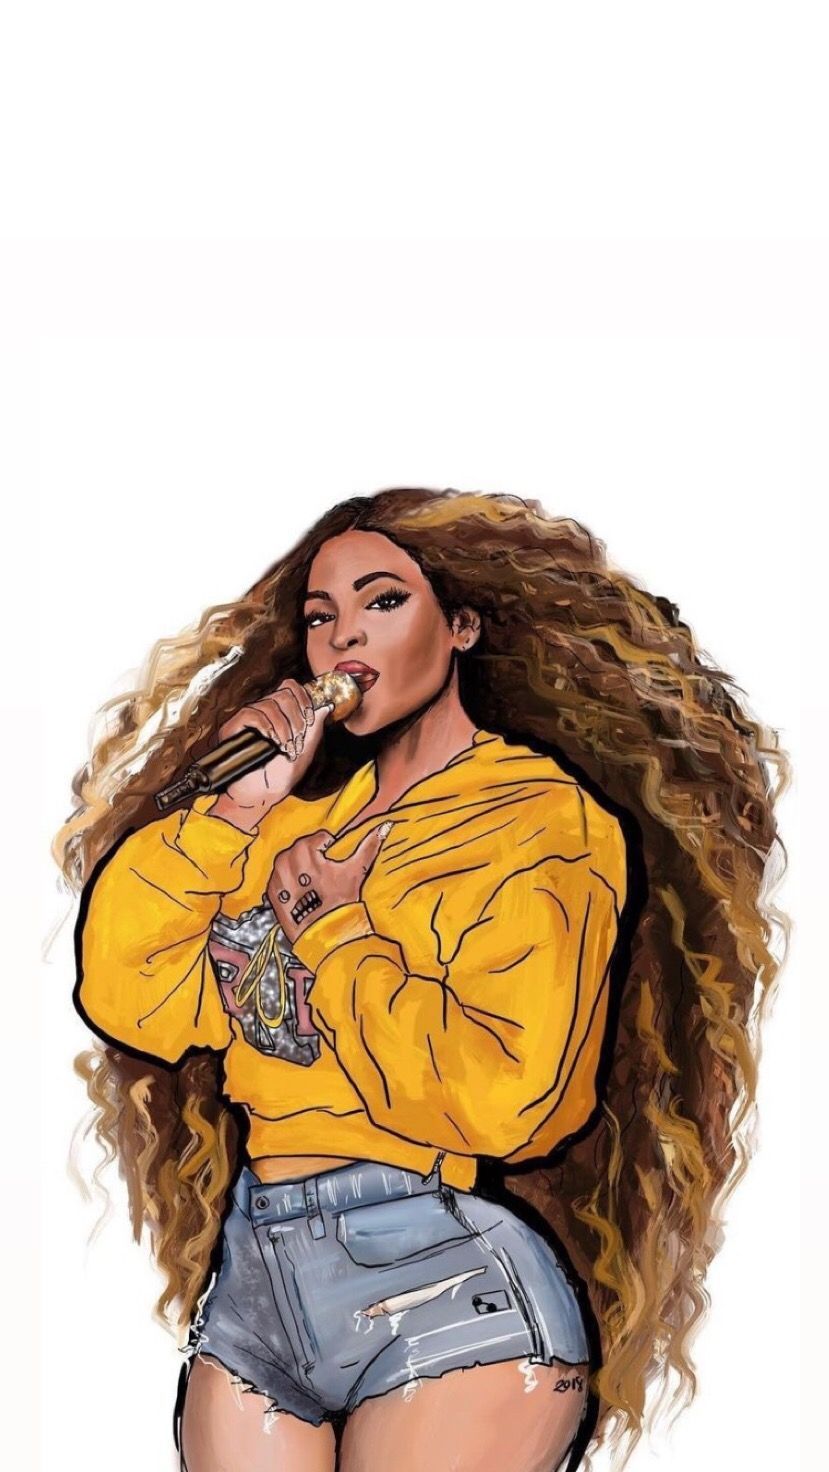 Beyonce Wallpaper drawing Homecoming. Beyonce drawing